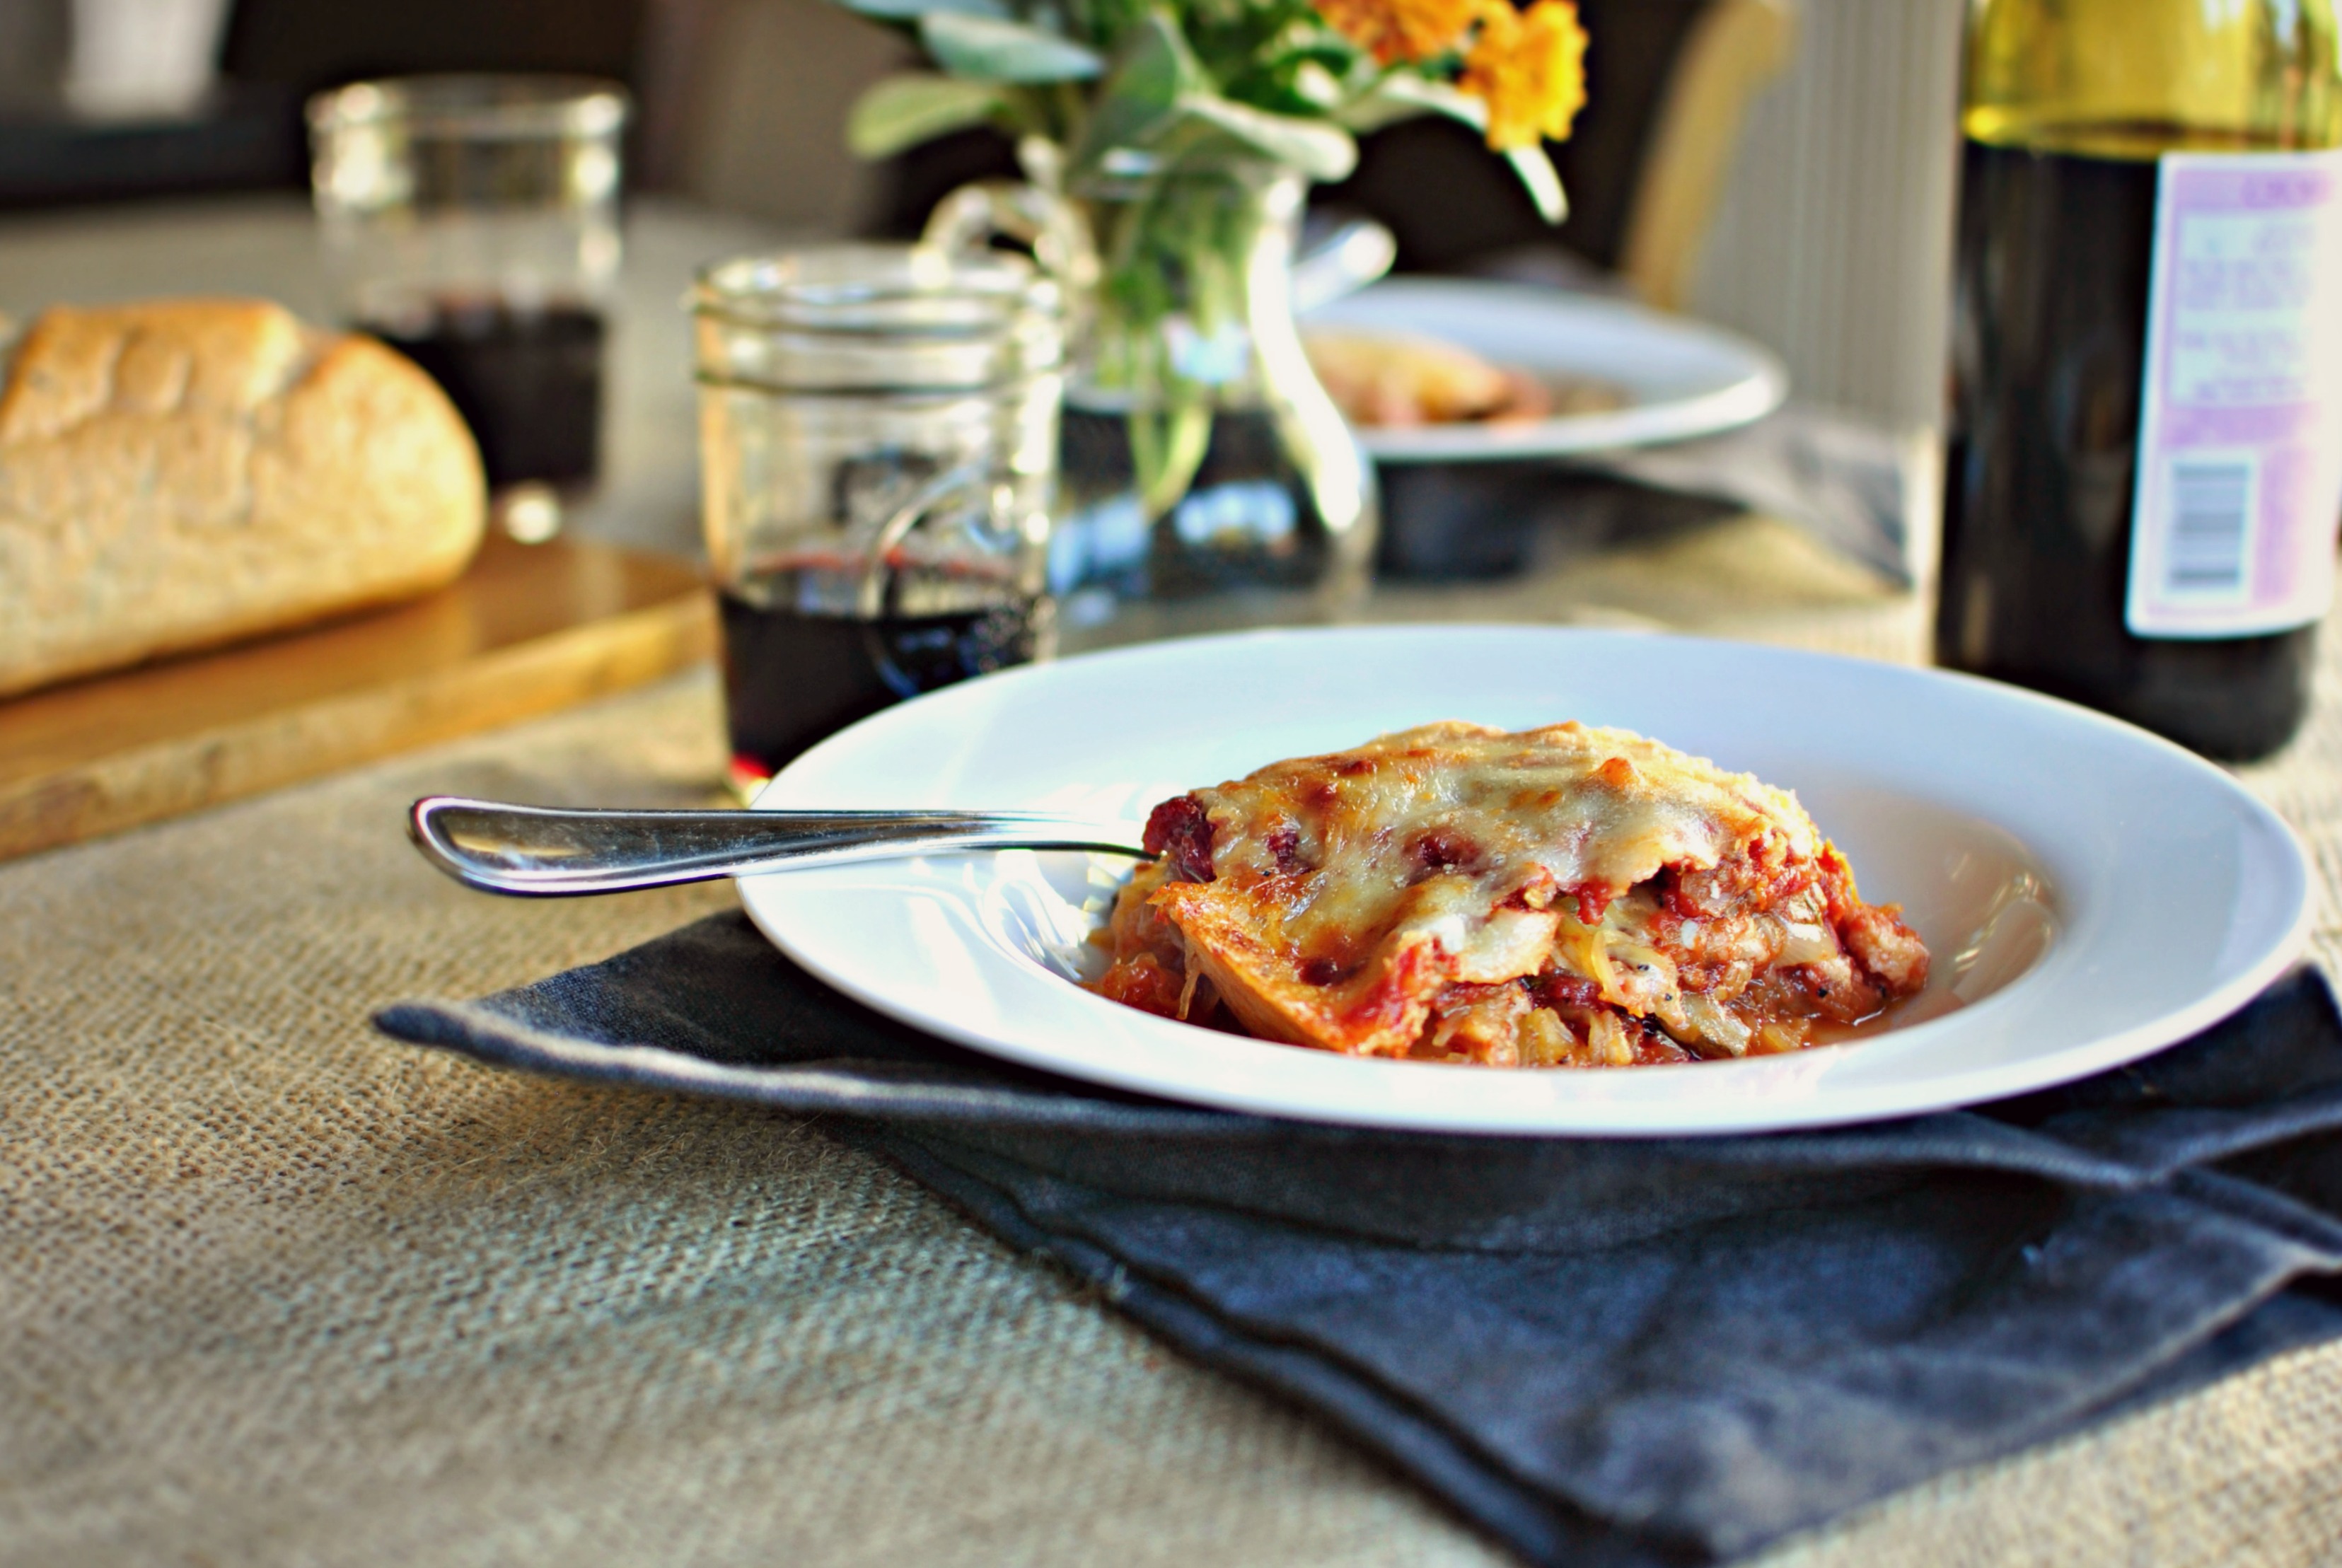 And if you give this Vegetarian Spaghetti Squash Lasagna recipe a